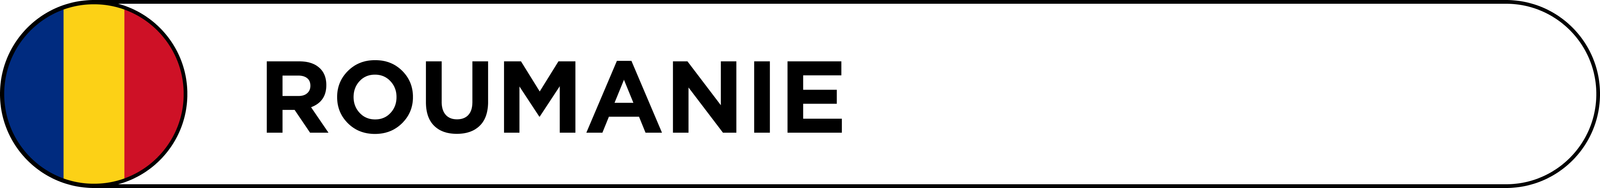 pictogramme nom roumanie